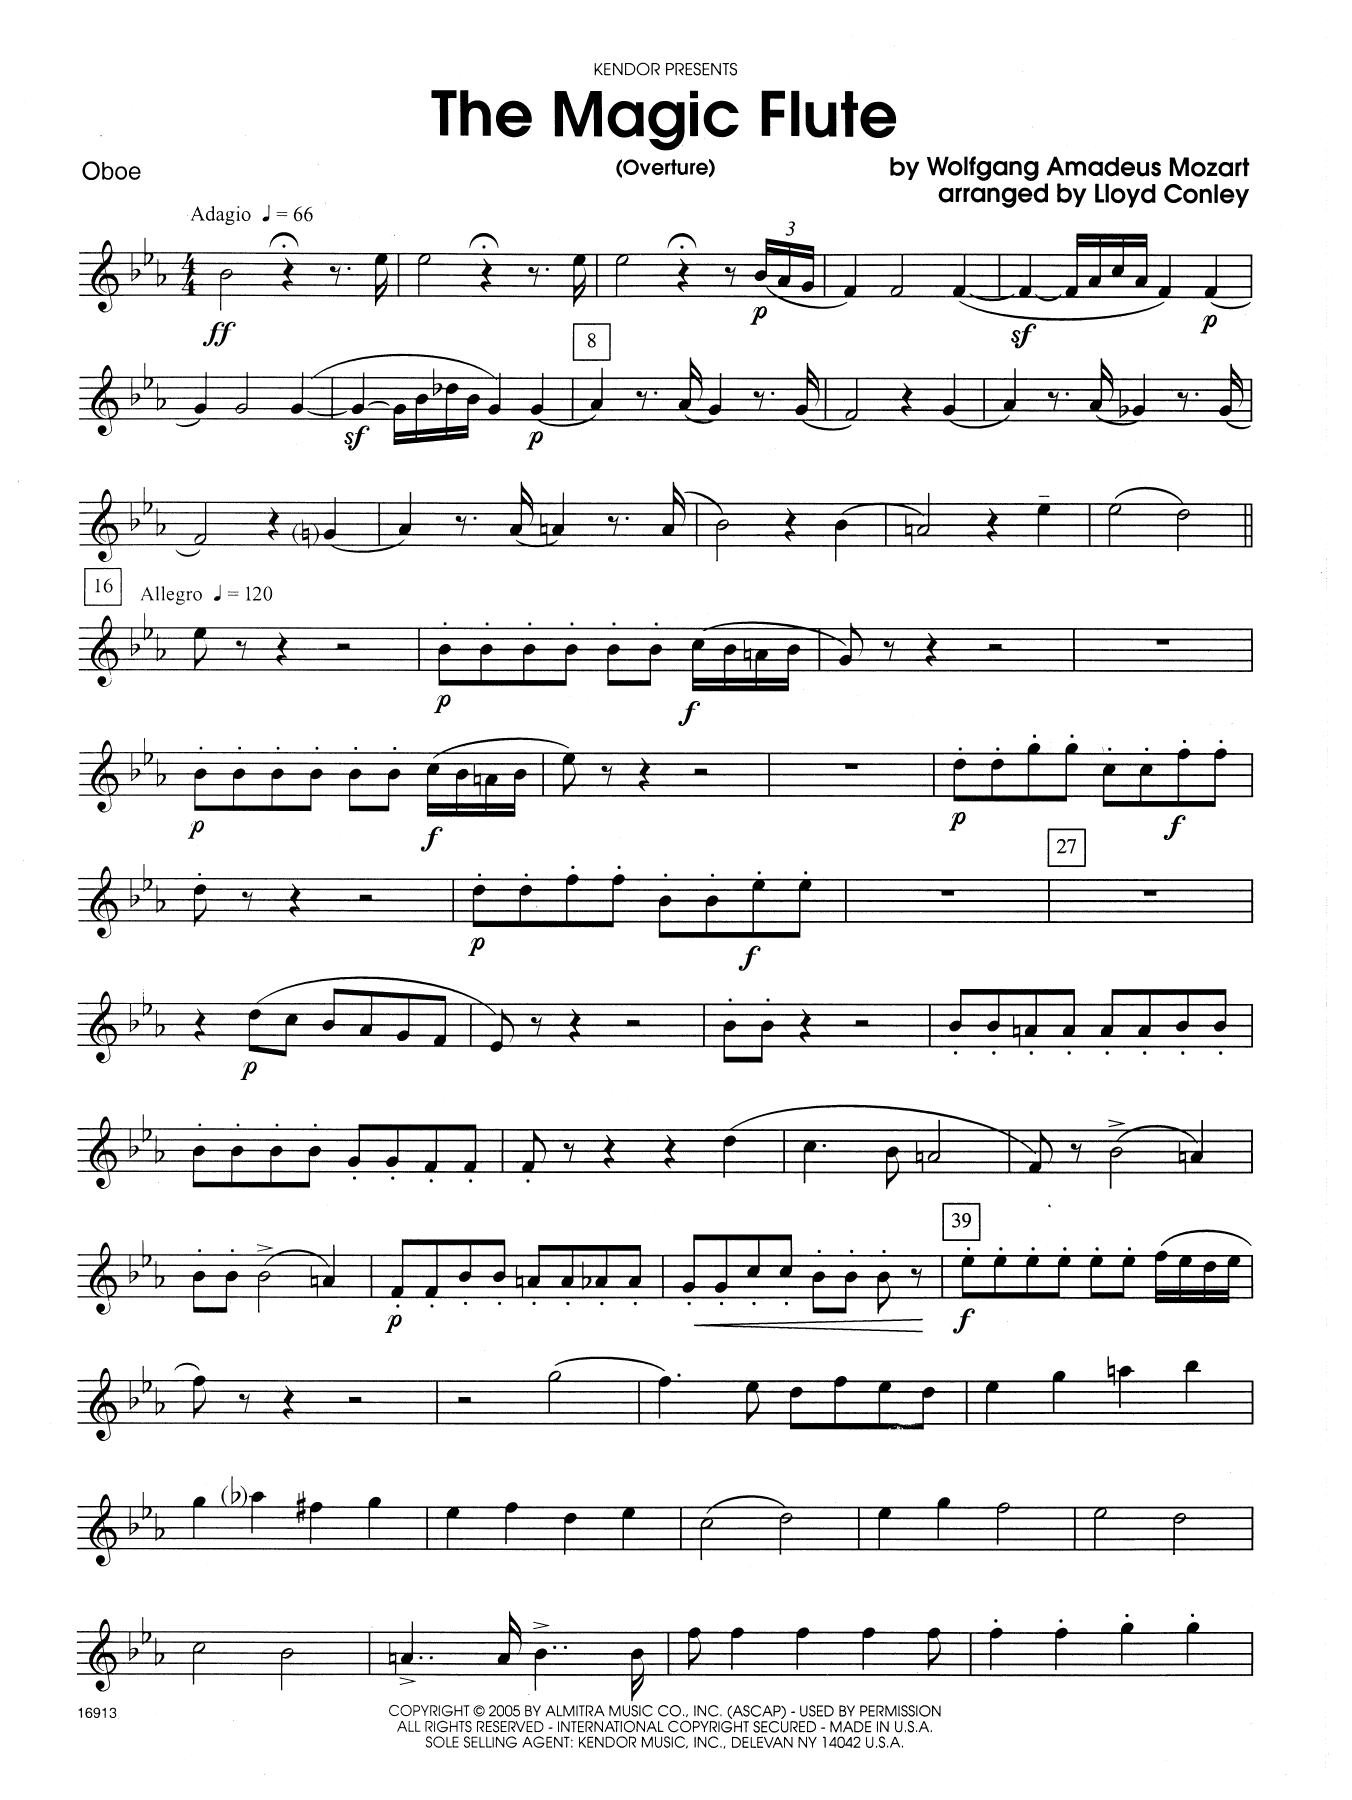 Download Lloyd Conley The Magic Flute (Overture) - Oboe Sheet Music